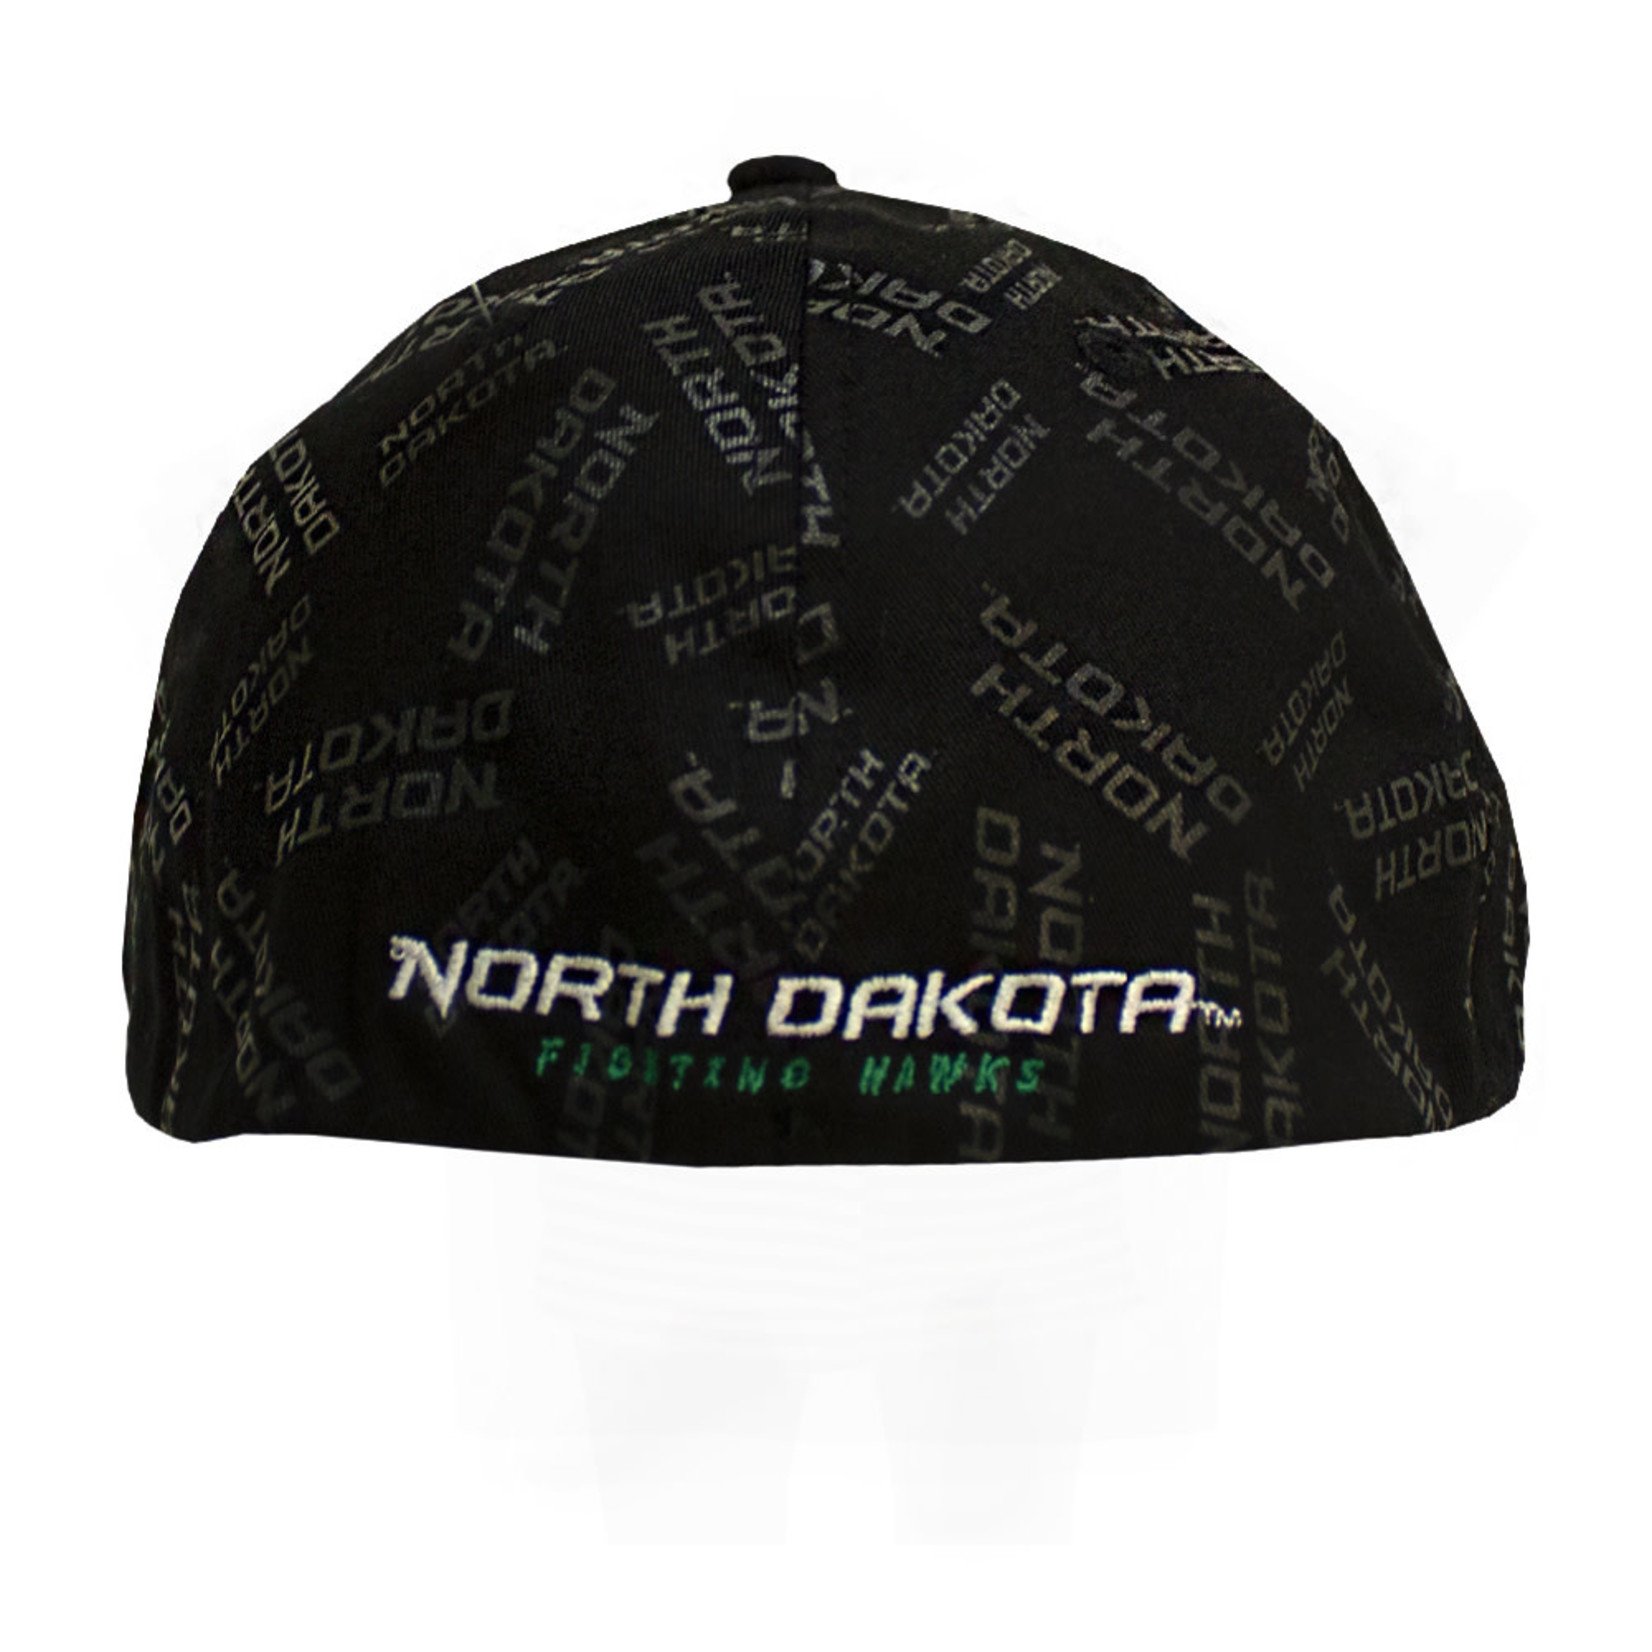 Franchise Club North Dakota All Over Hat